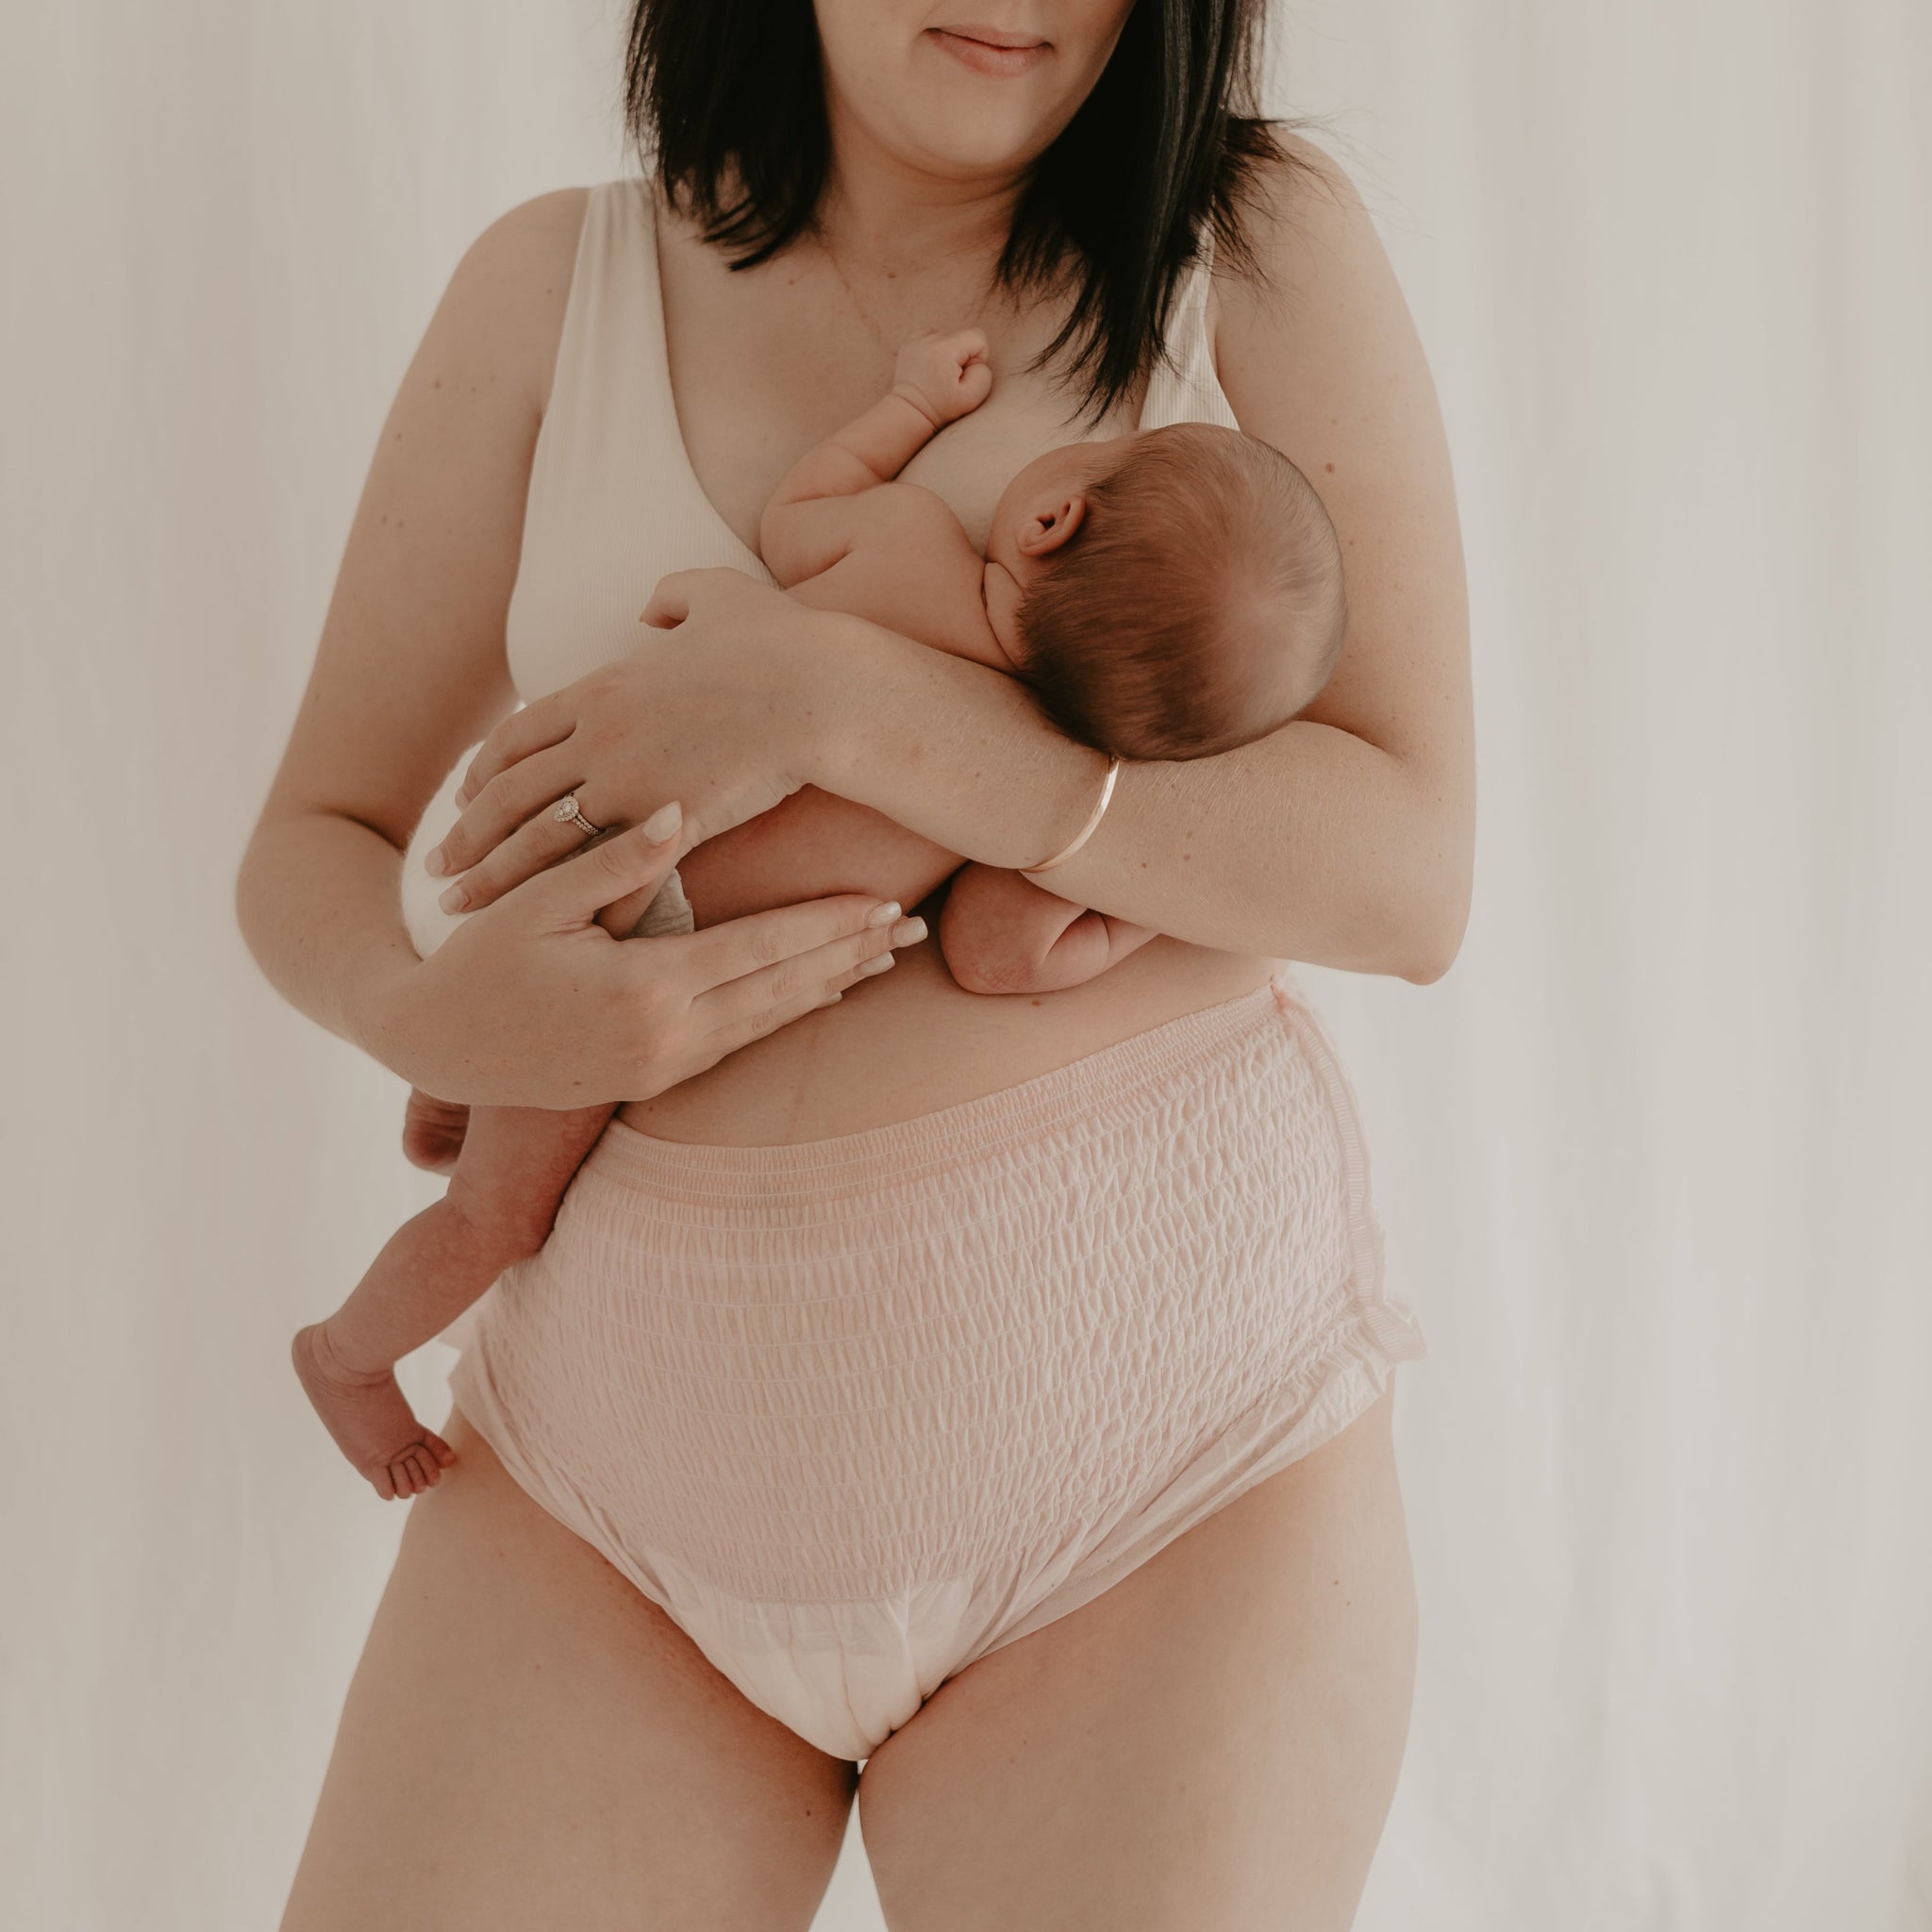 Disposable Panties - Buy Disposable Maternity Panties For Women Online